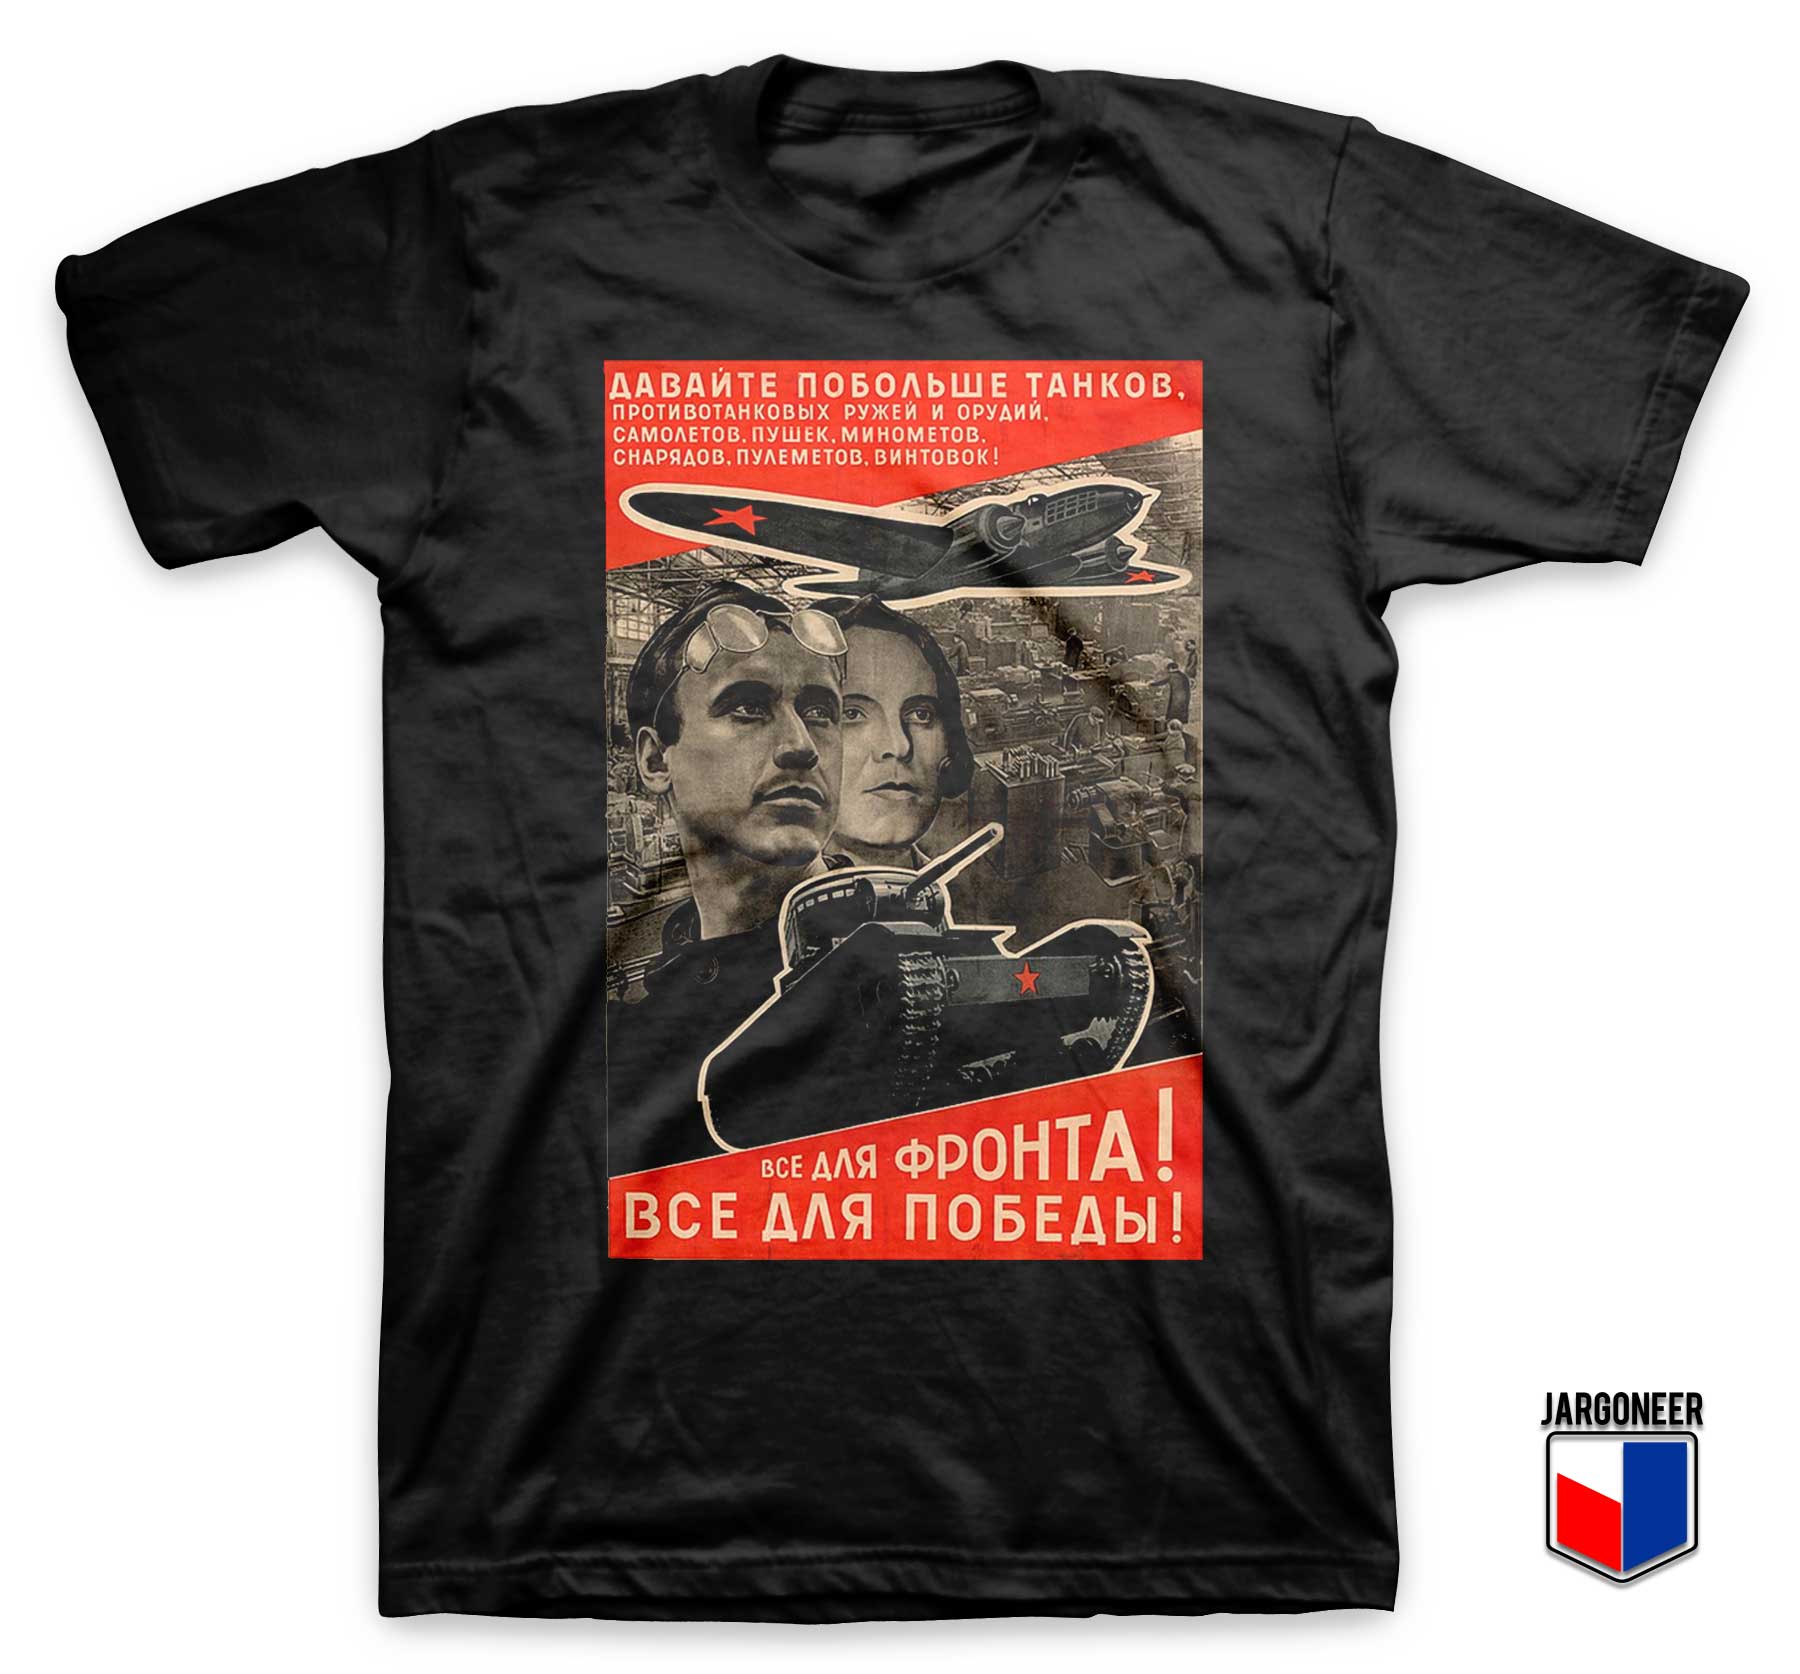 USSR WWII Propaganda T Shirt - Shop Unique Graphic Cool Shirt Designs